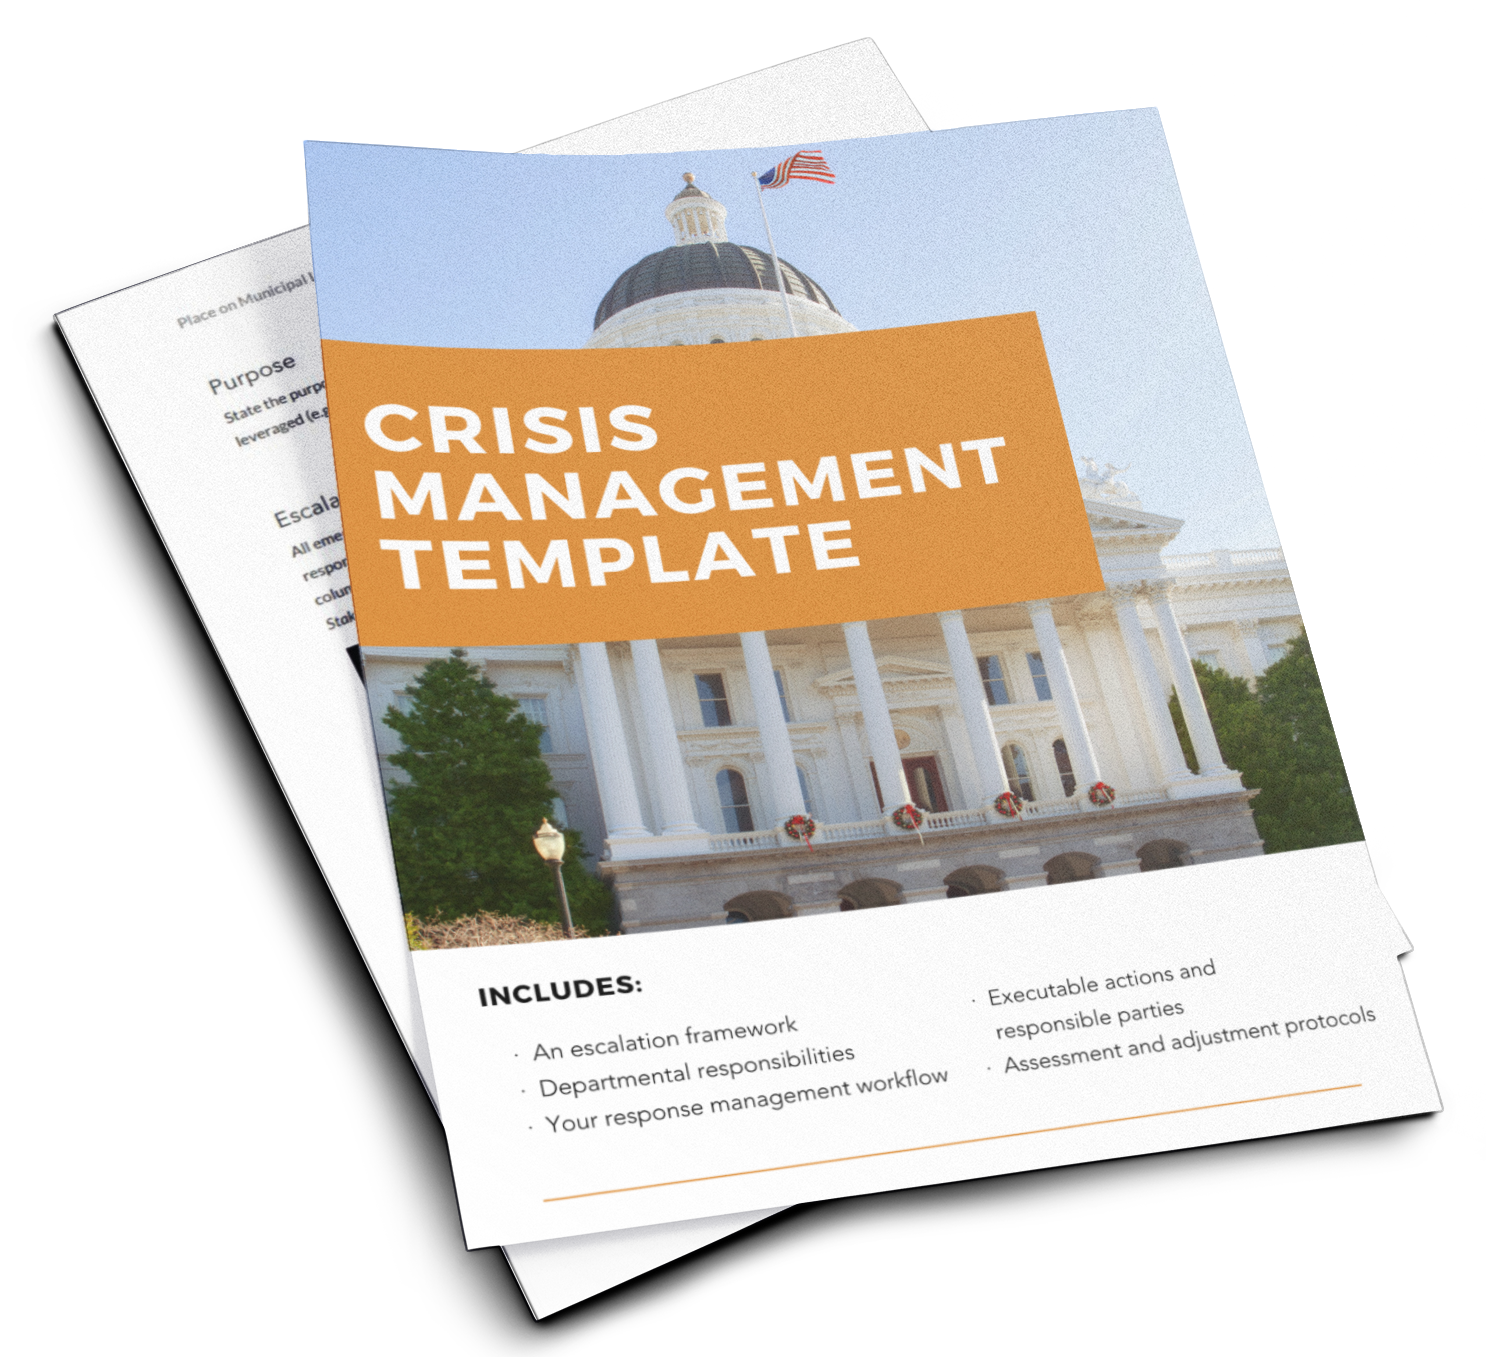 Crisis management template flyer image-1